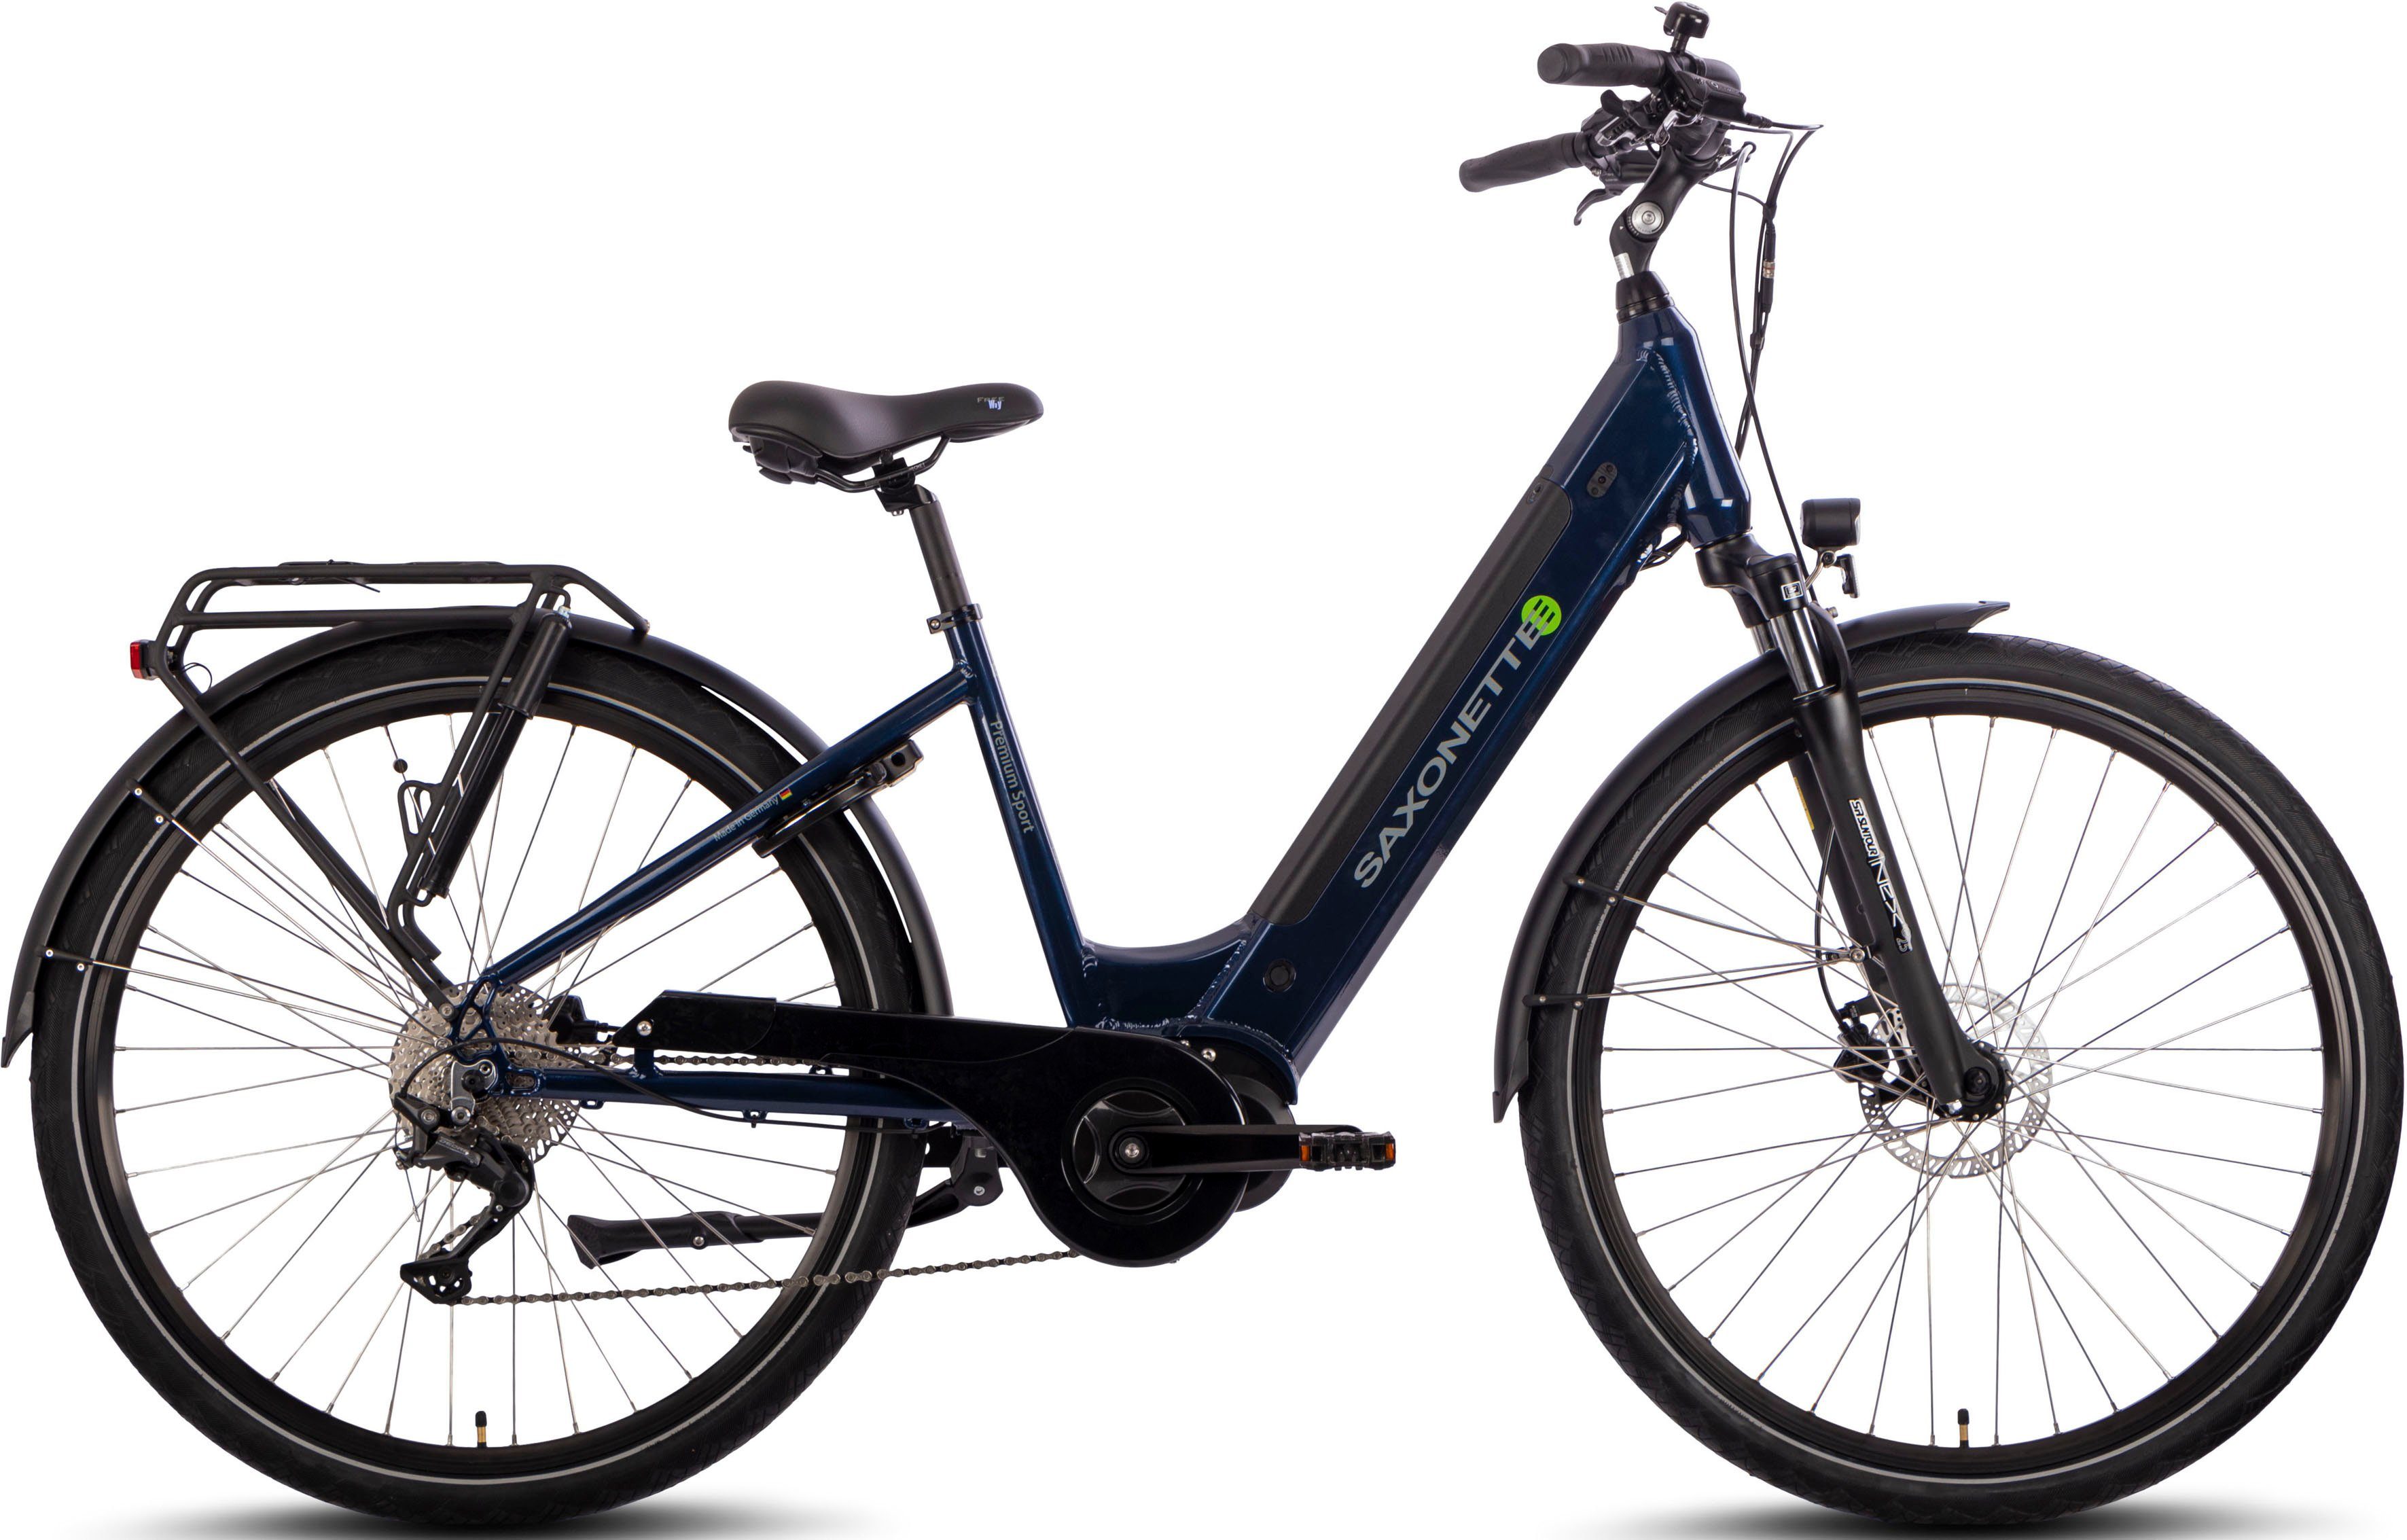 SAXONETTE E-Bike Premium Sport (Wave), 10 Gang, Kettenschaltung, Mittelmotor, 522 Wh Akku